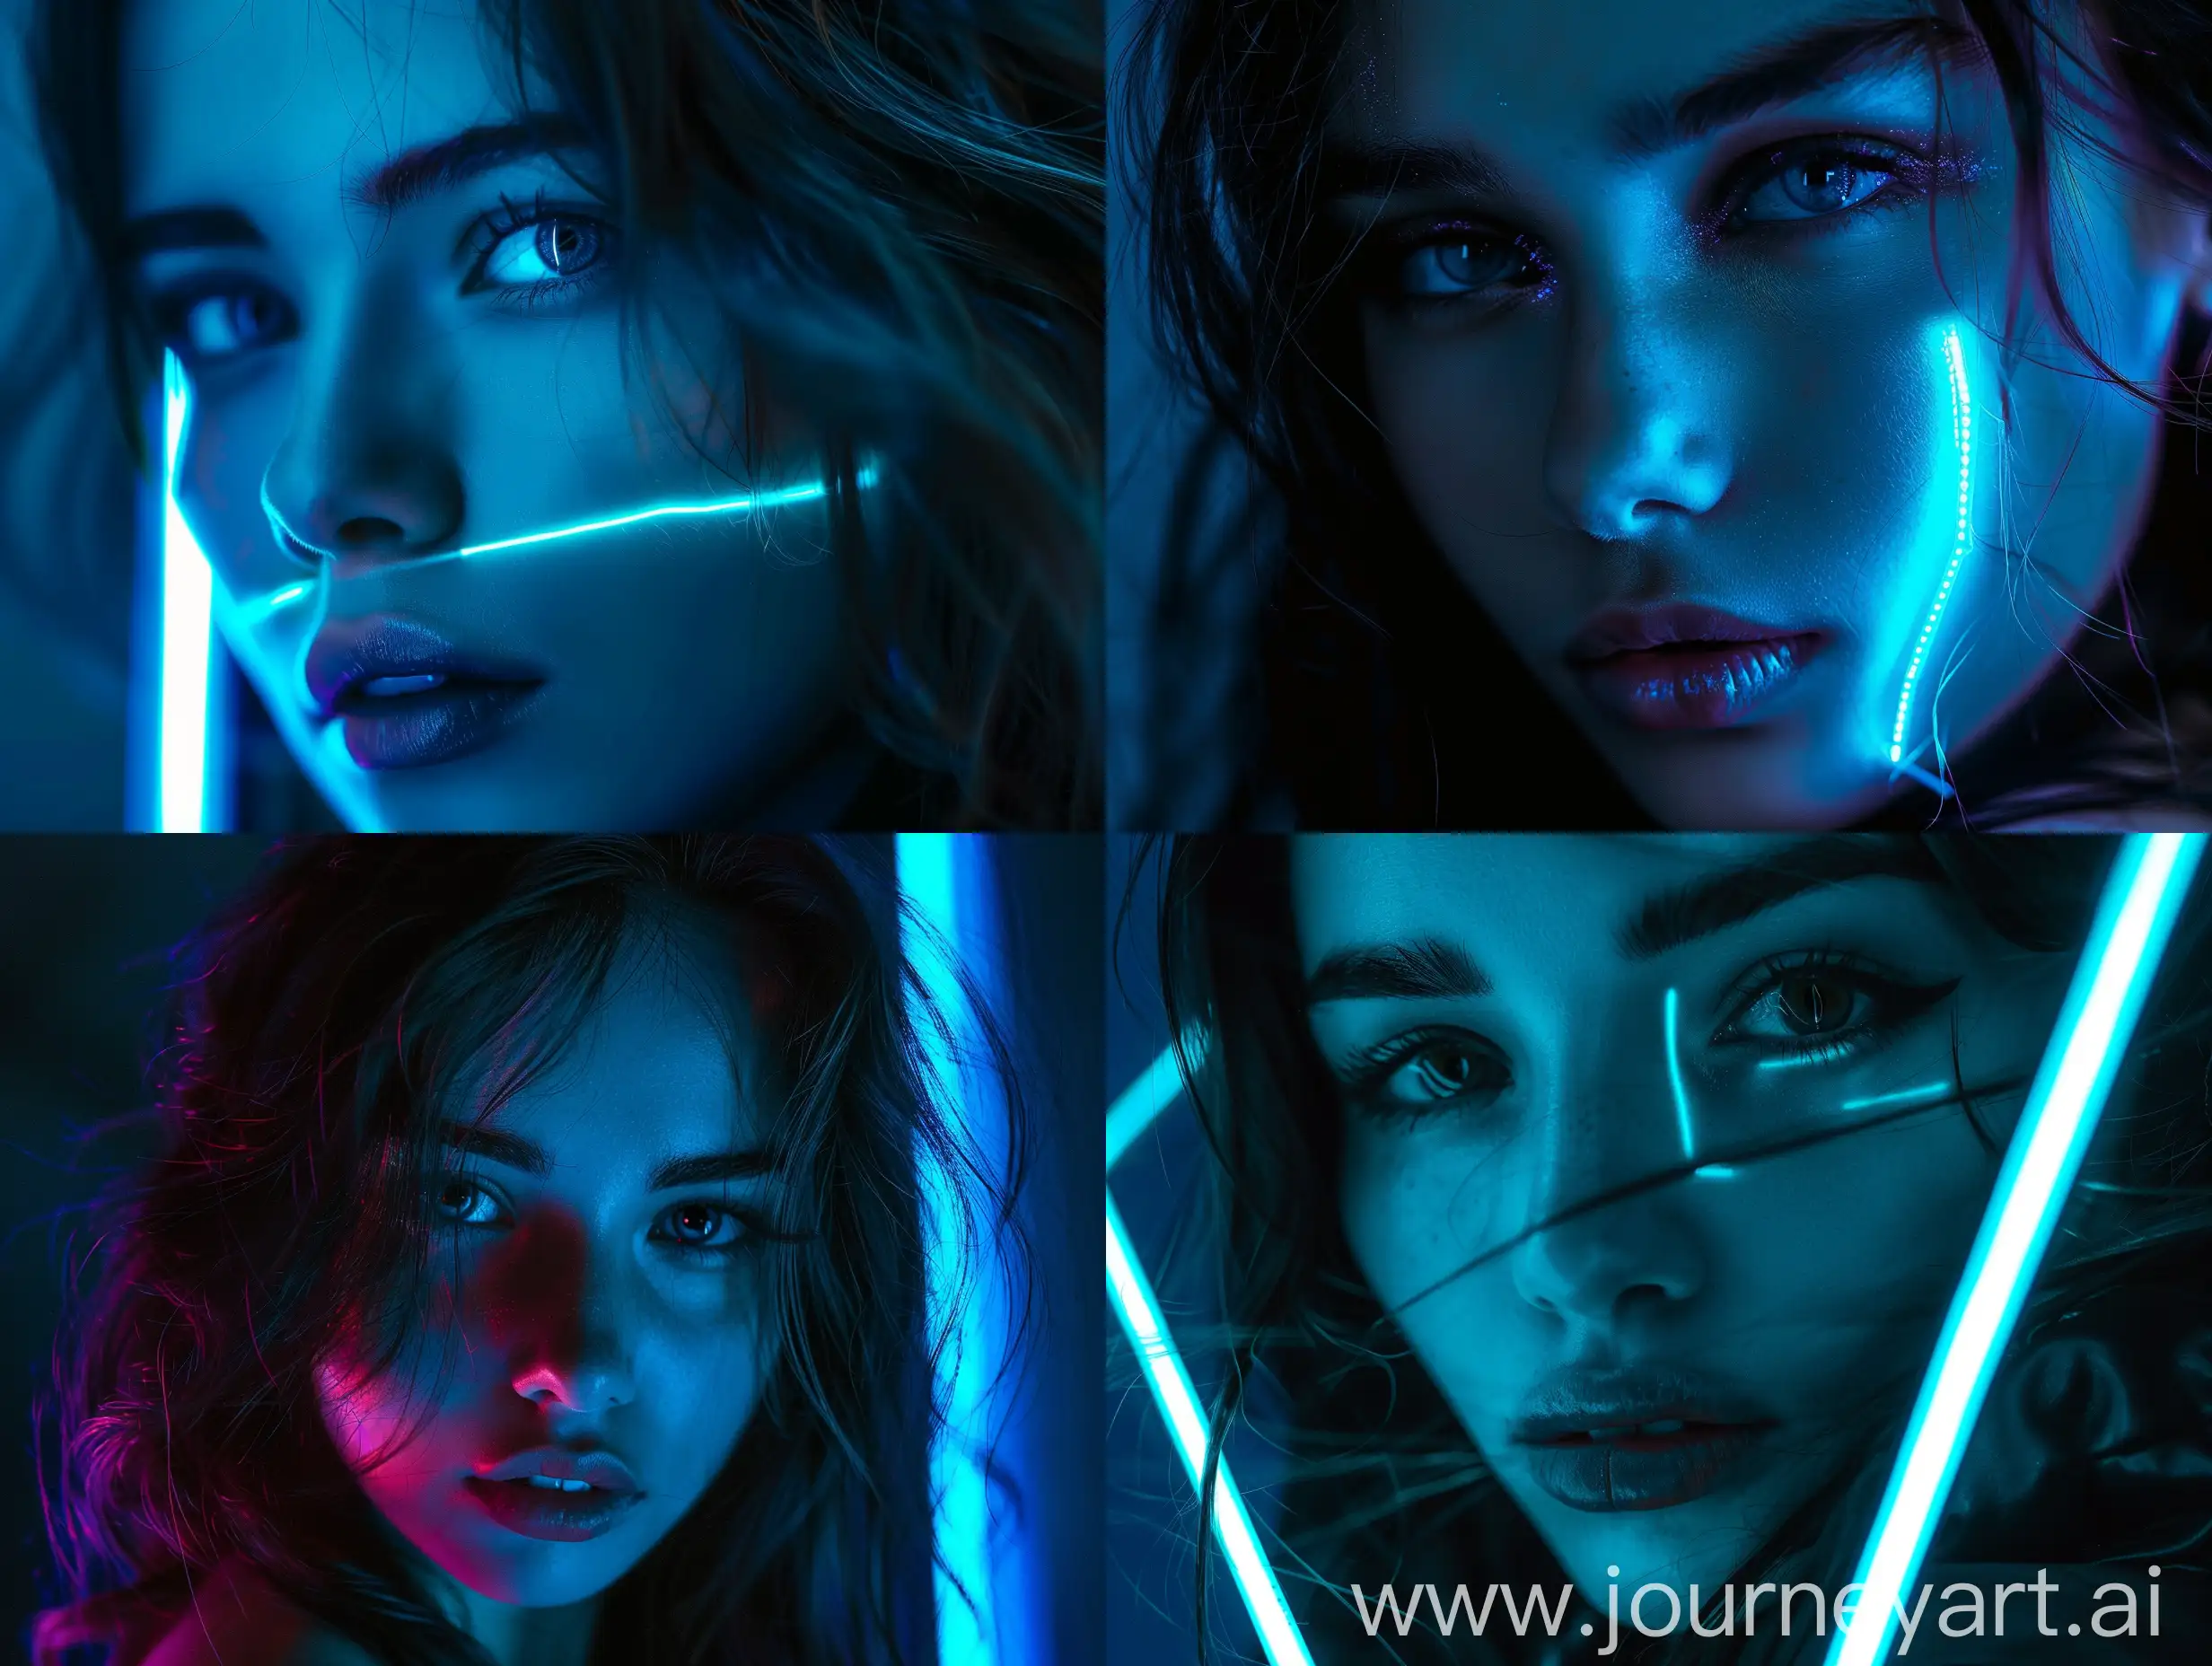 beautifull hot cute girl in dark backgroud , on girl face some blue neon light lines, dramatic pic, photoshop logo , youtube logo , dark tone theme